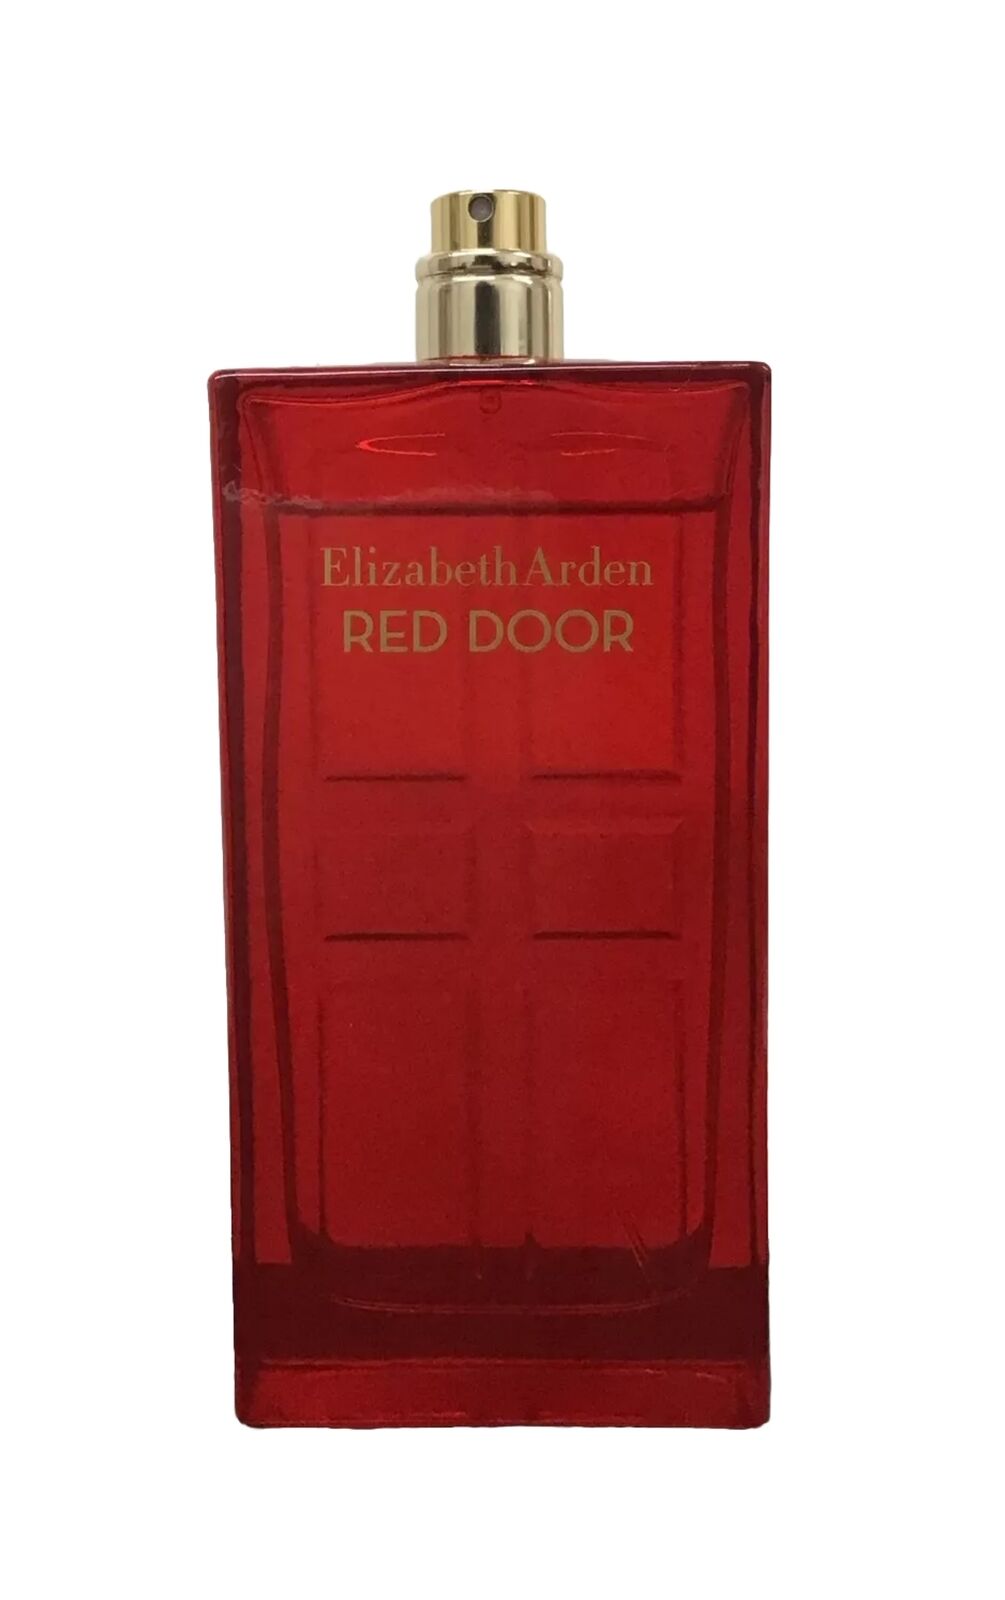 Elizabeth Arden Red Door Eau De Toilette Spray 3.3 Fl Oz, As Pictured, 90% Full